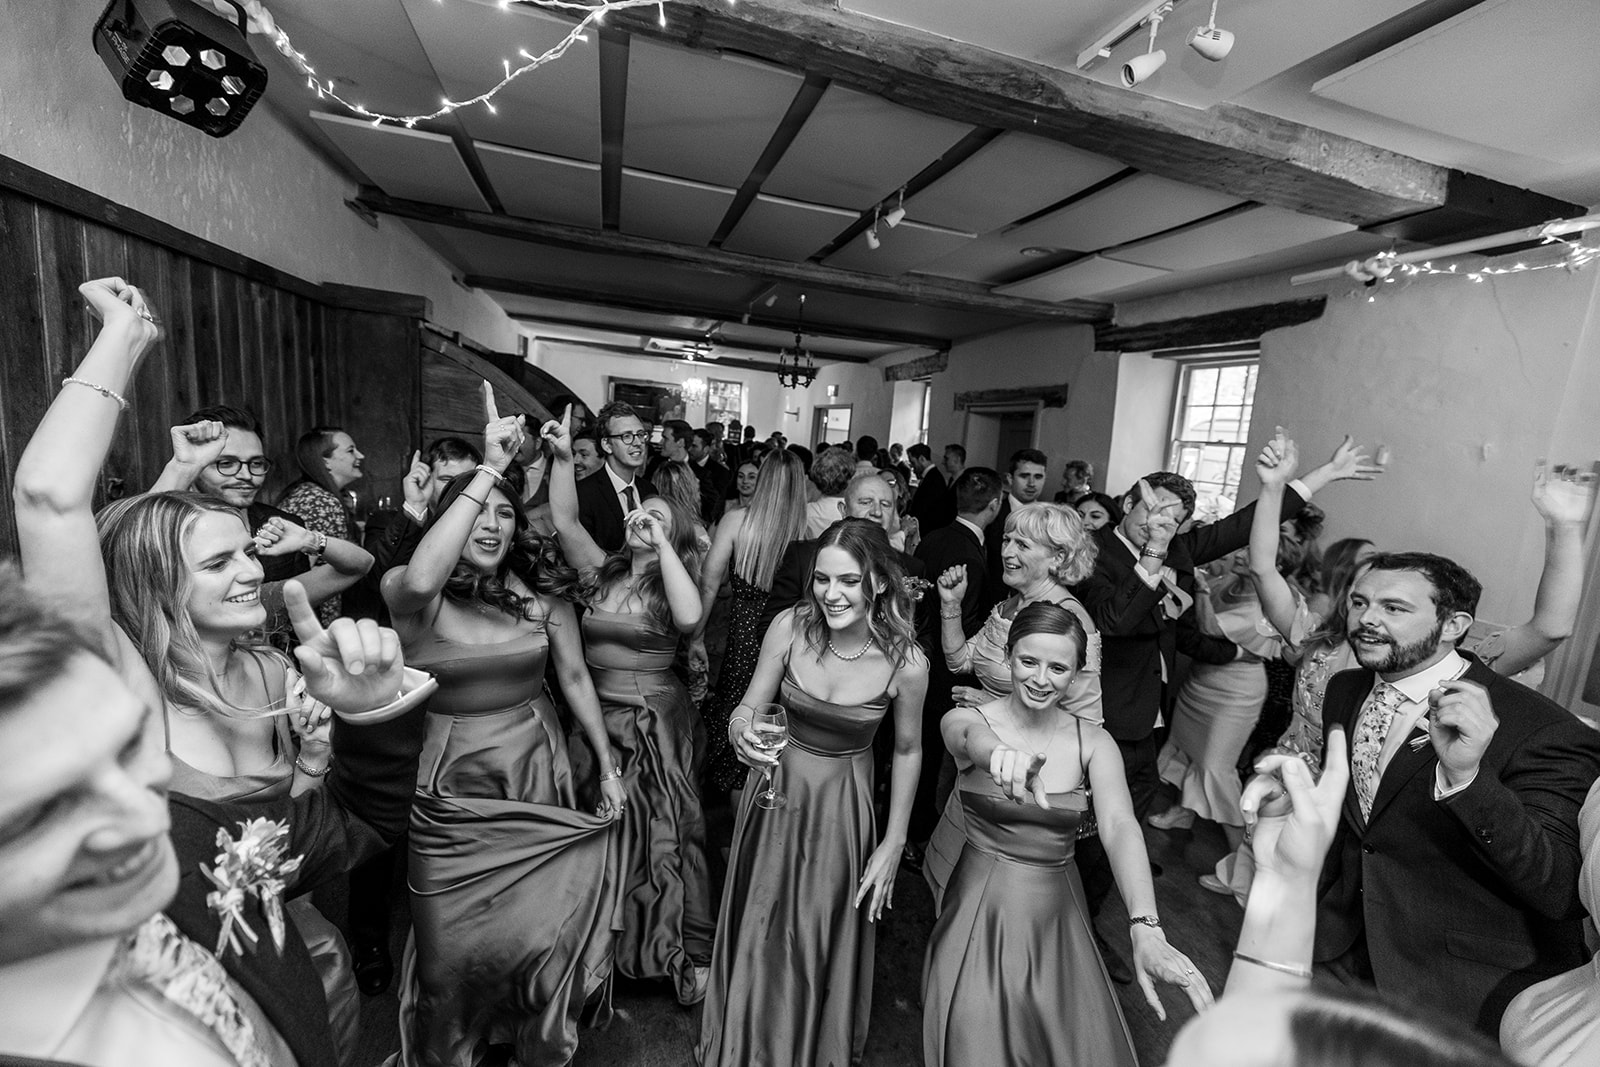 Pennard House dance floor at wedding 